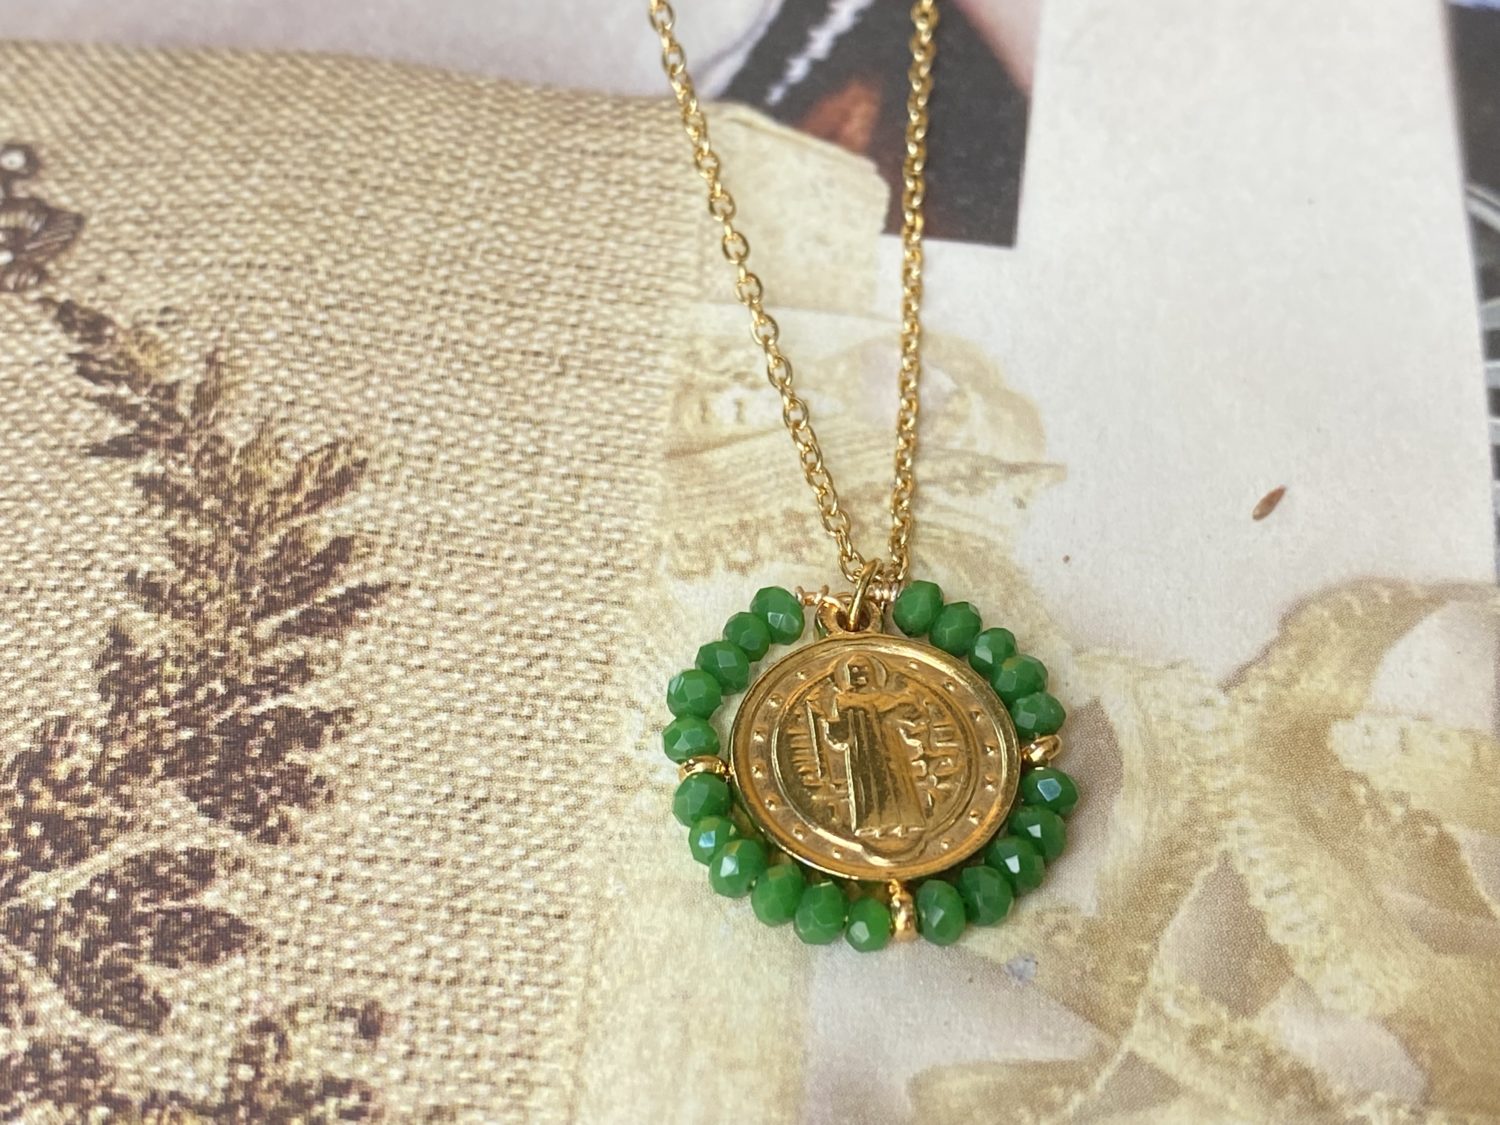 Collier médaille ronde verte - Dolita select store de bijoux fantaisie